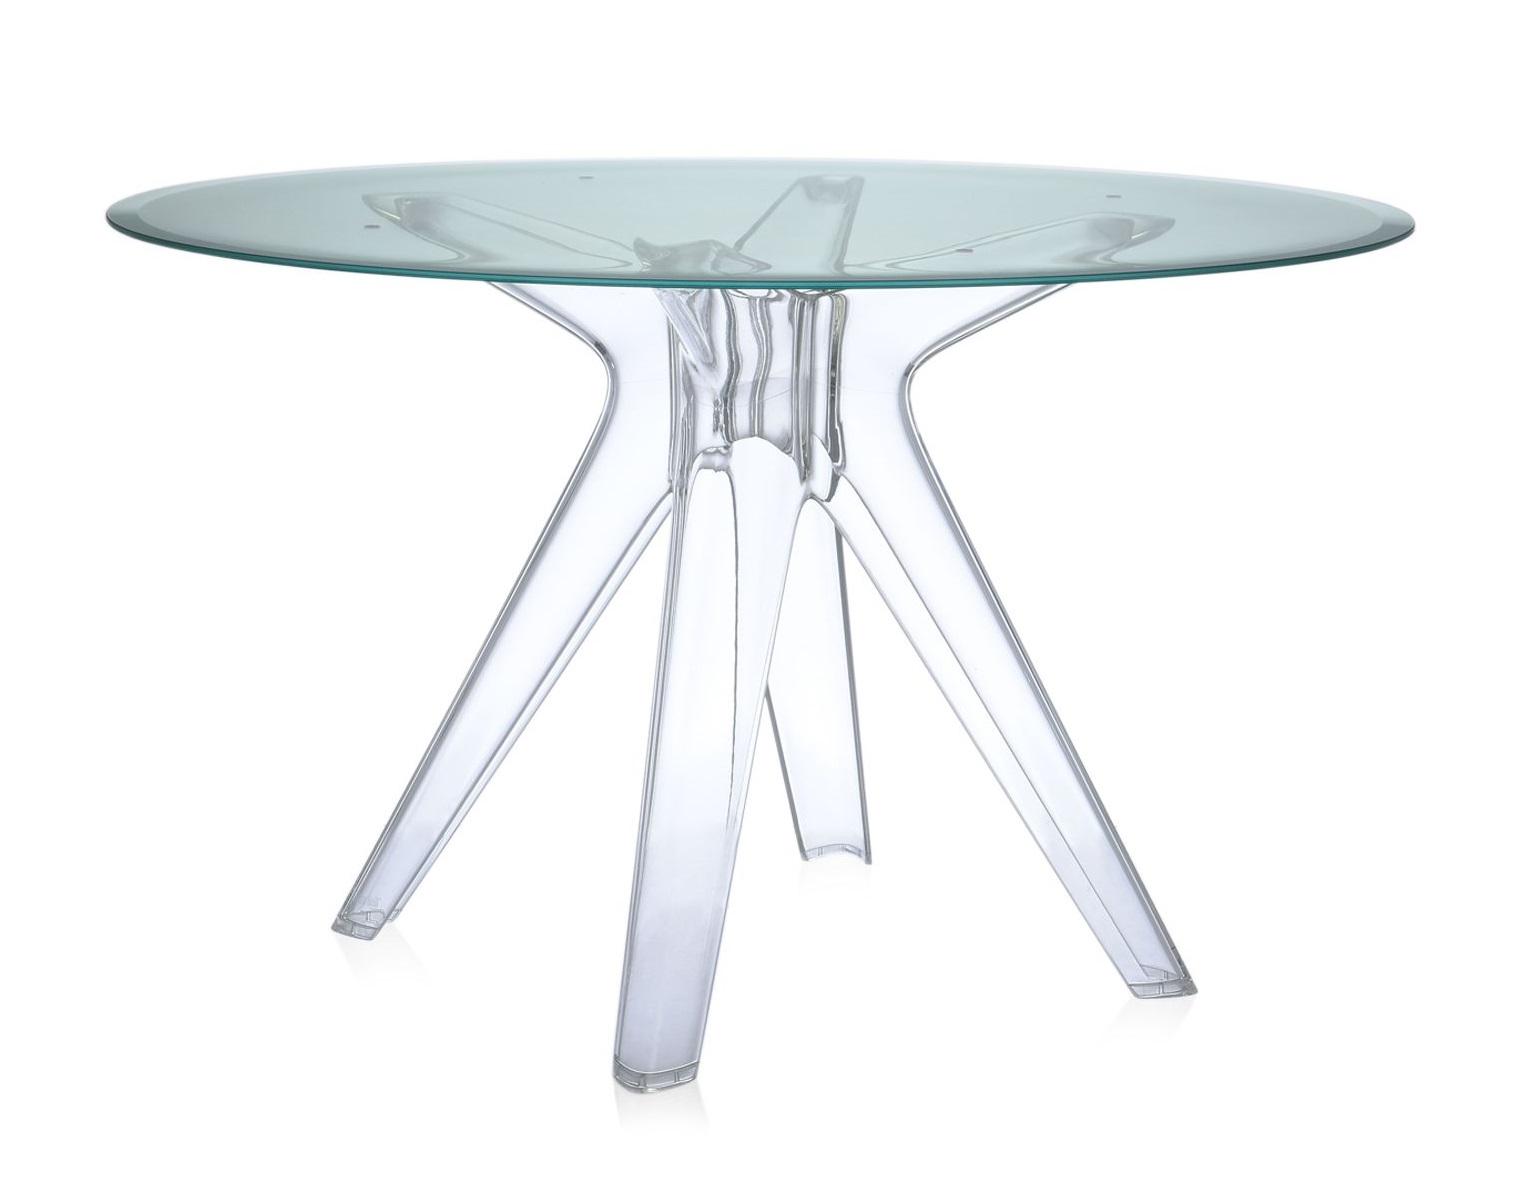 Masa Kartell Sir Gio design Philippe Starck diametru 120cm verde – transparent Kartell pret redus imagine 2022